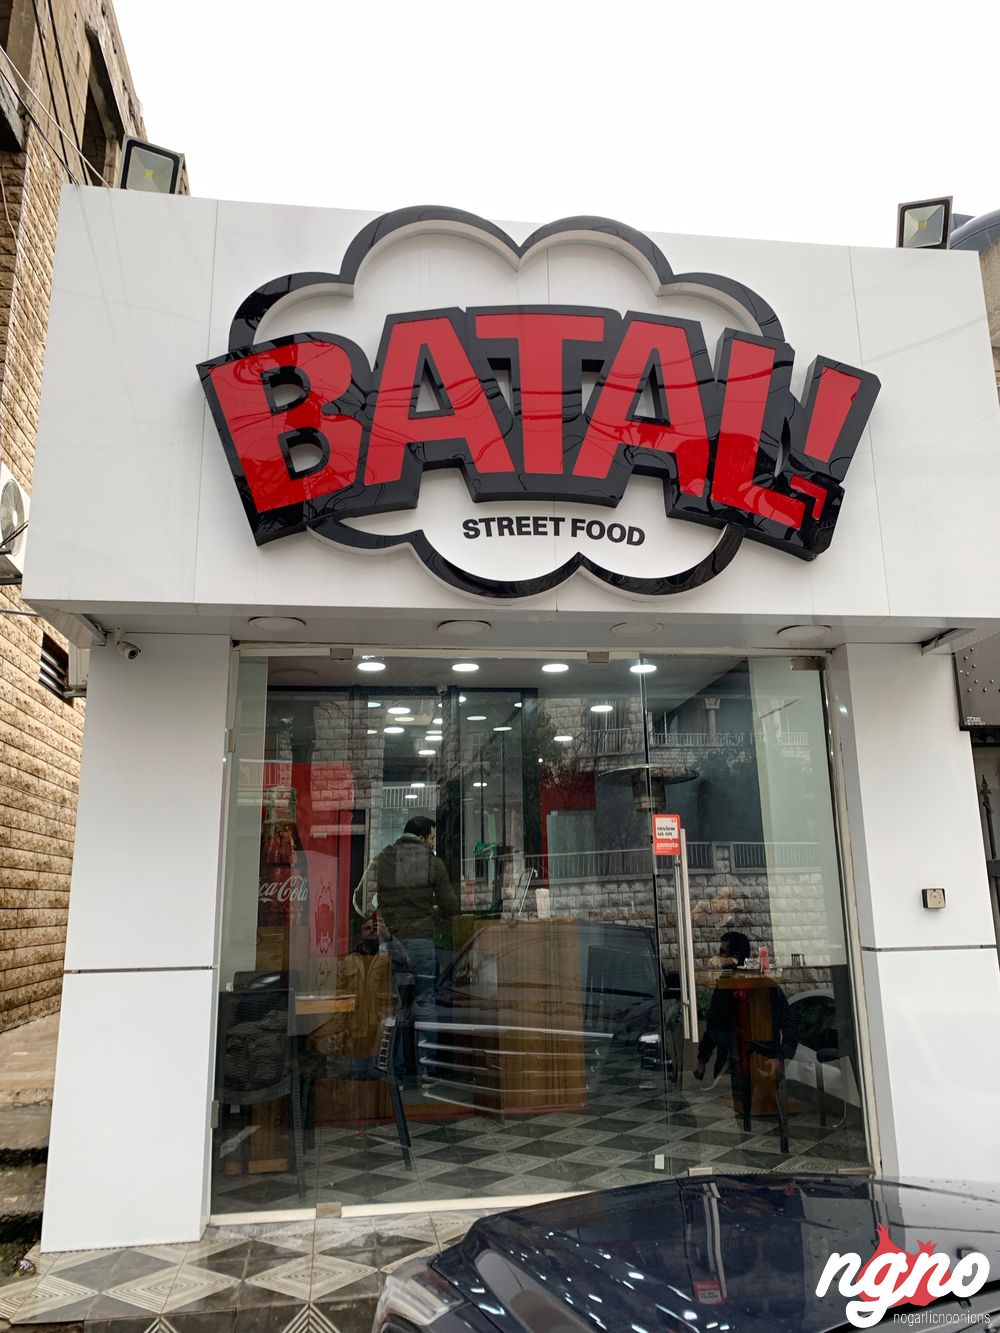 batal-street-food-nogarlicnoonions-312019-03-06-04-13-49